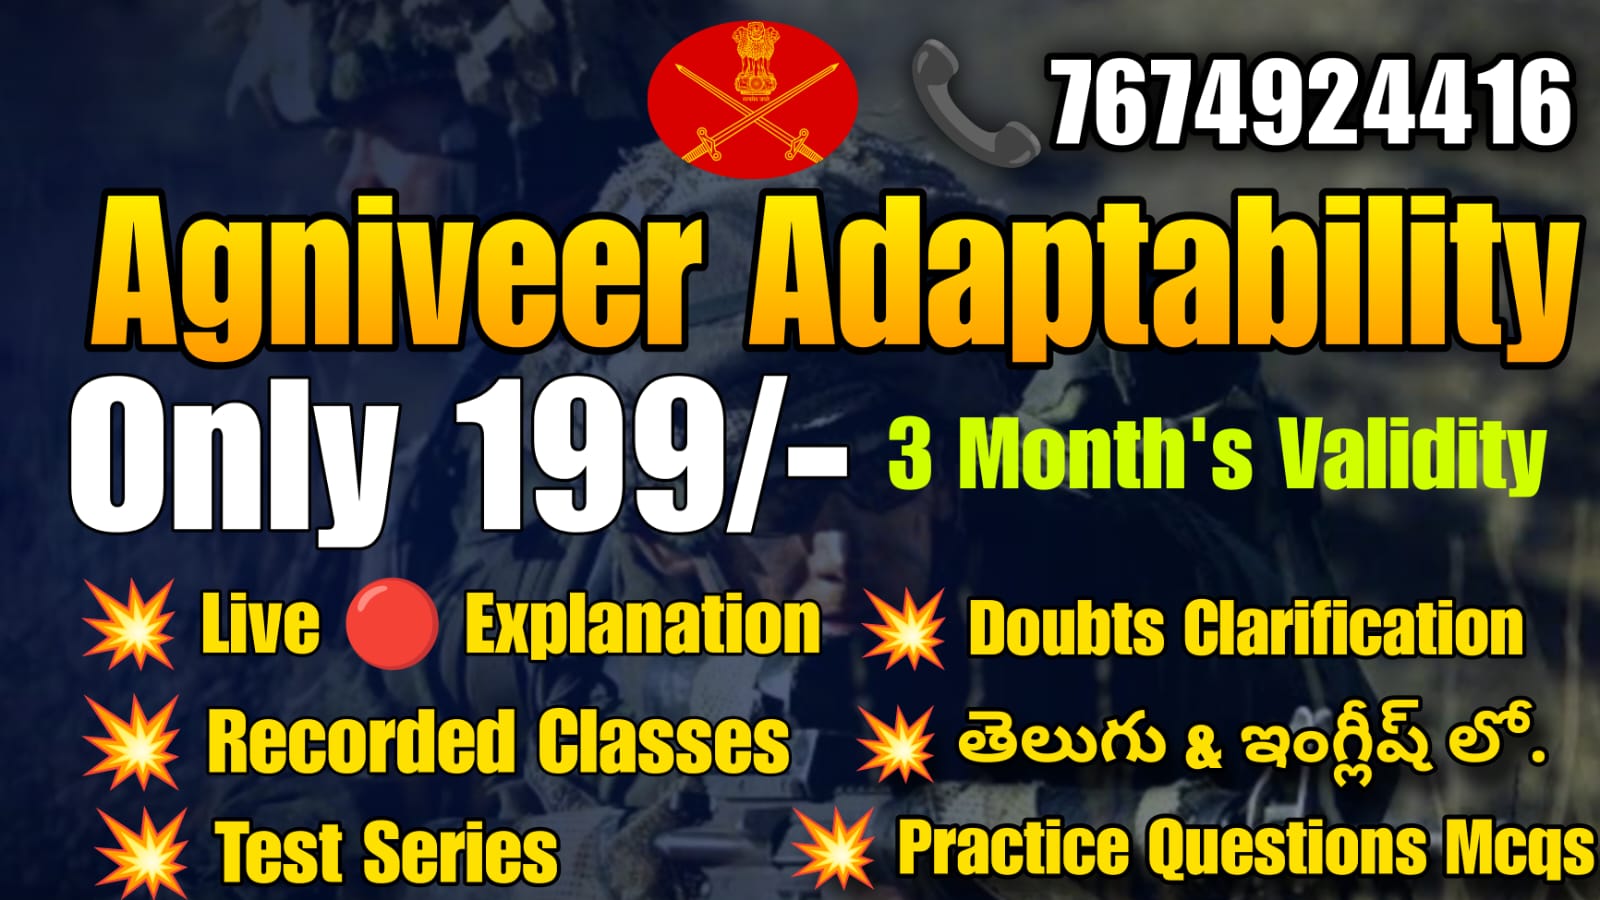 Agniveer Adaptaility Test